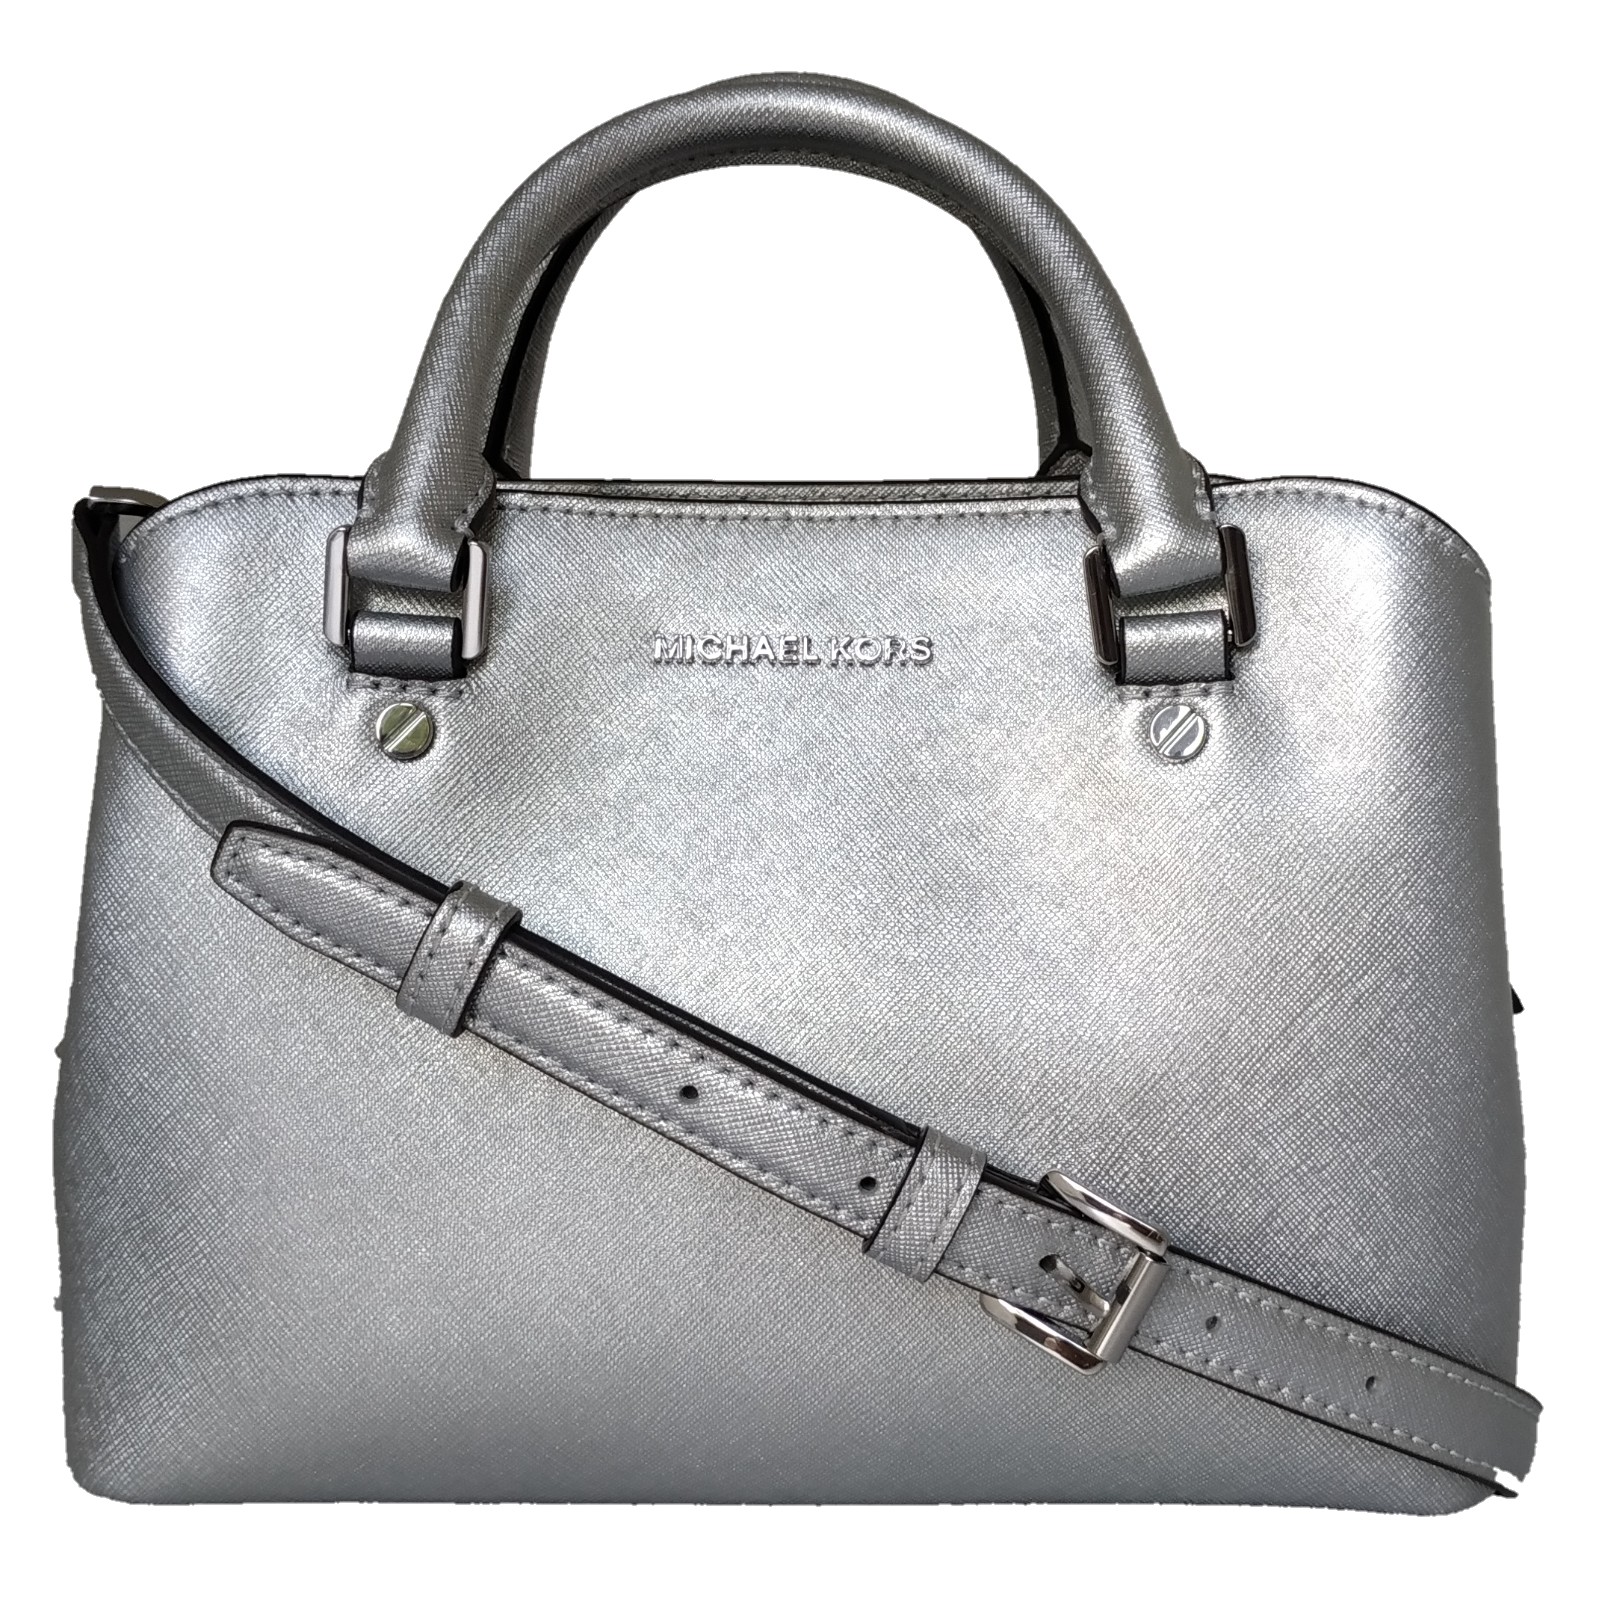 michael kors silver handbag